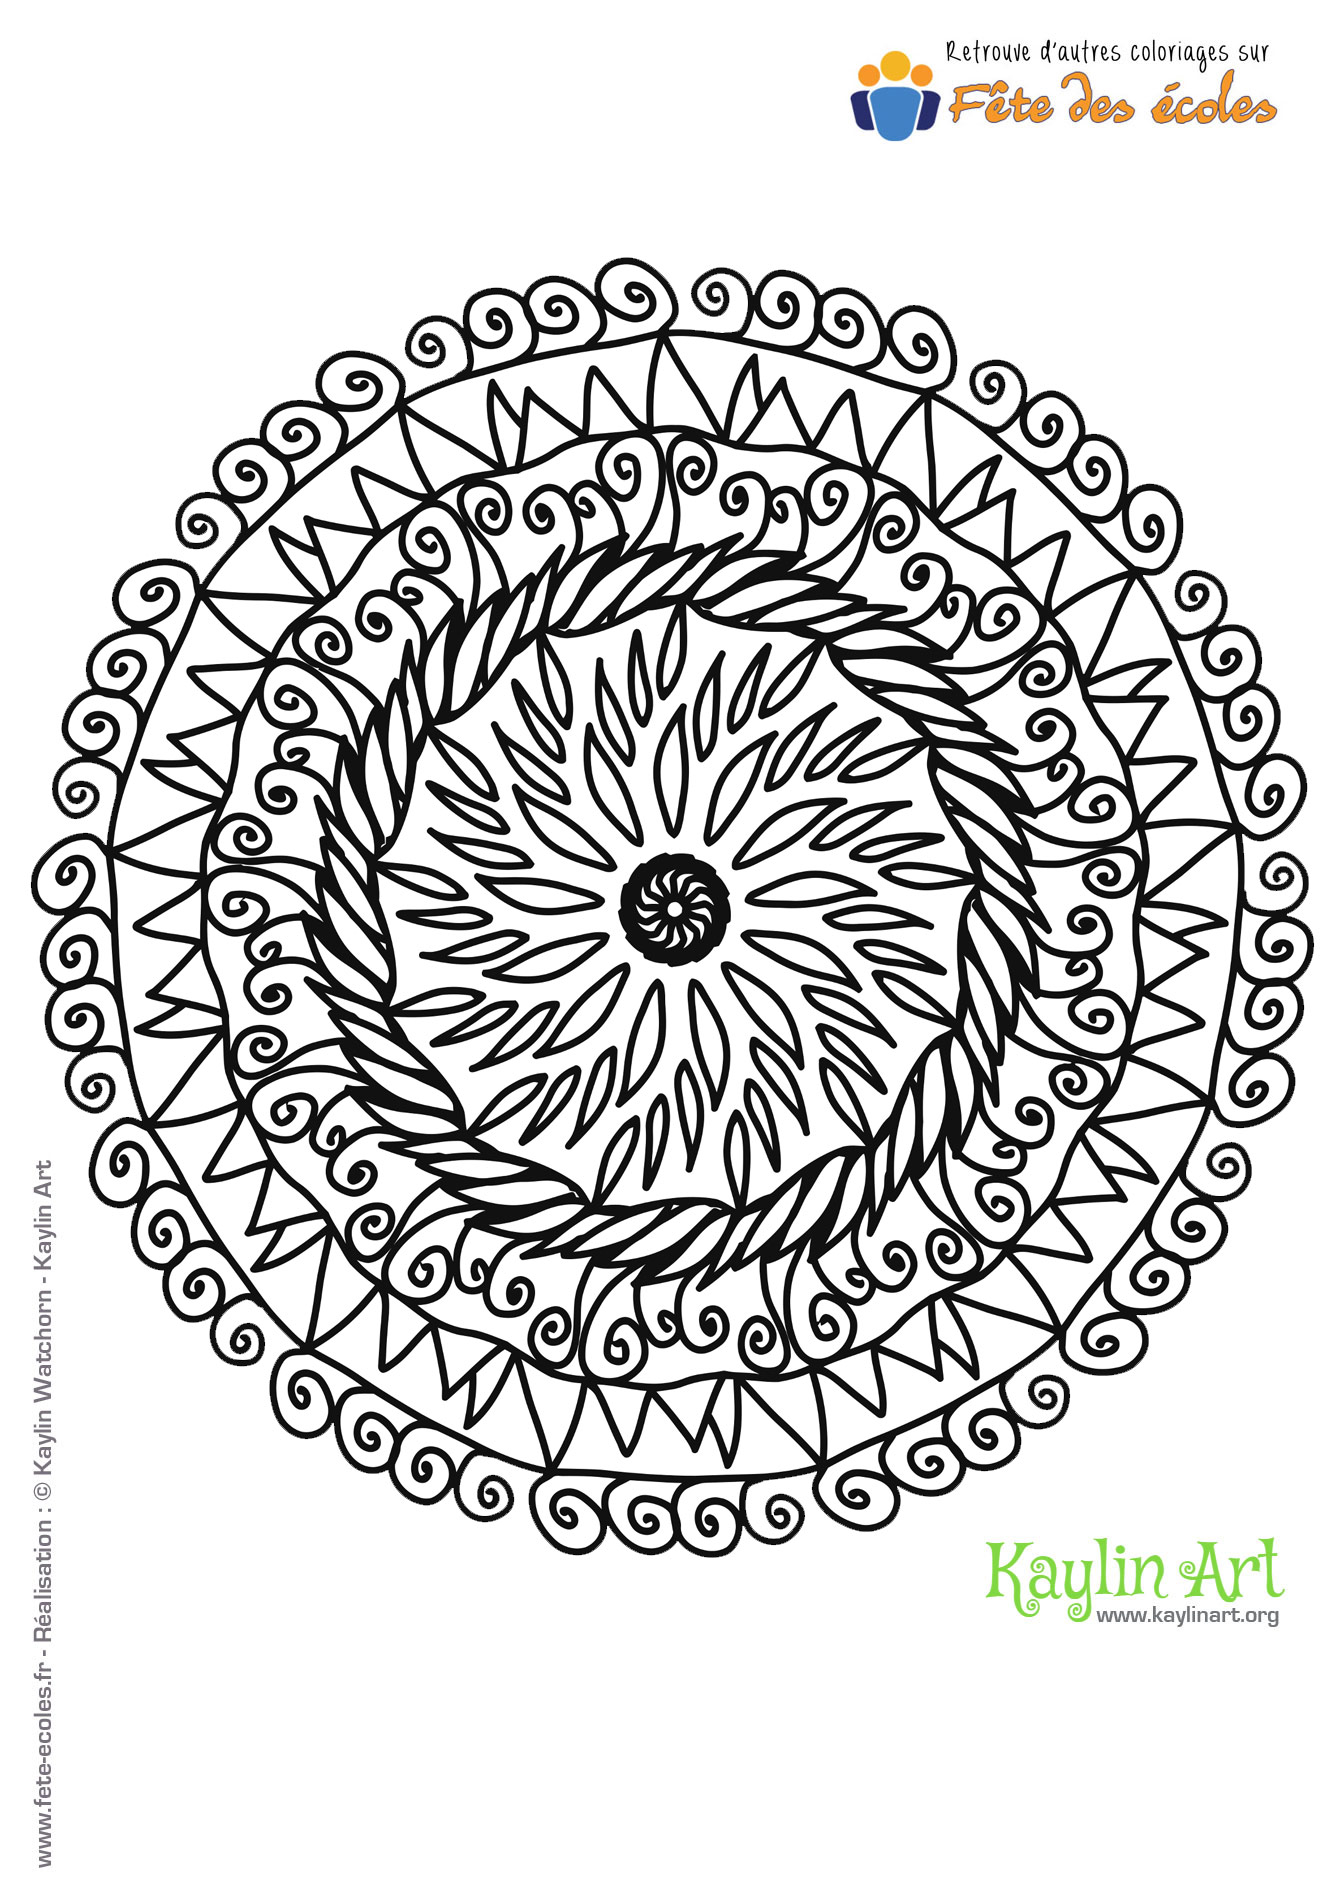 Coloriage Mandala de l'illustratrice Kaylin Art, Kaylin Watchorn